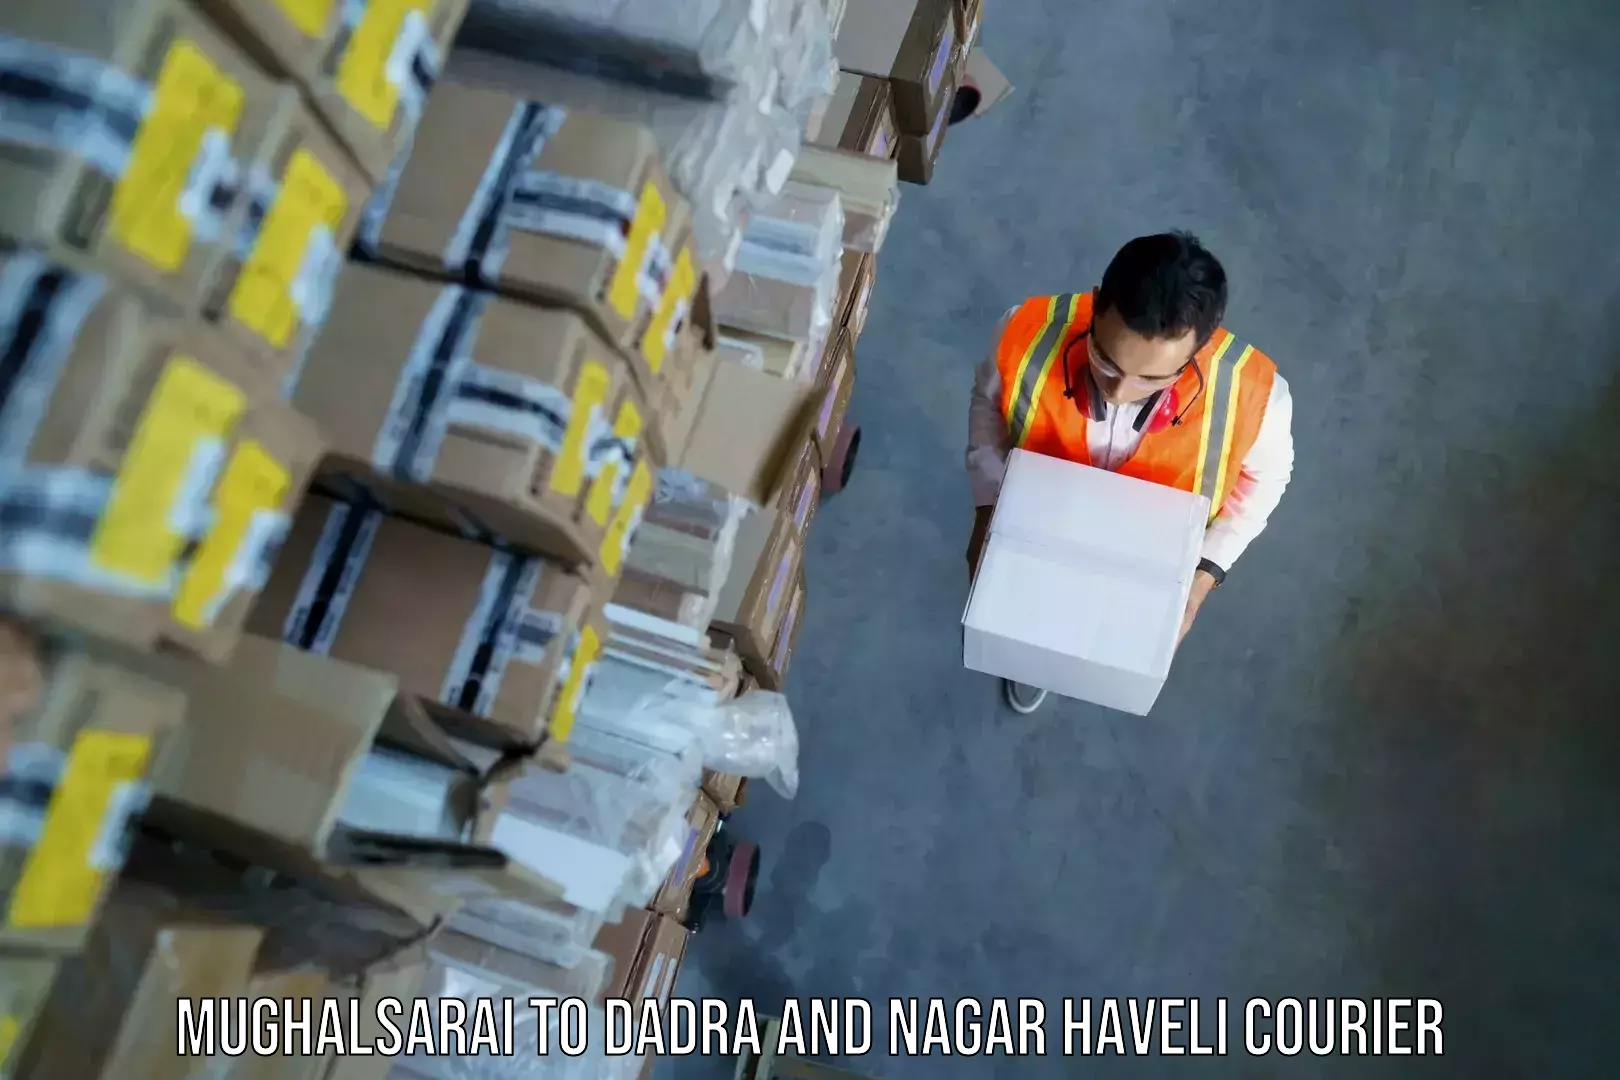 Luggage transport company Mughalsarai to Dadra and Nagar Haveli